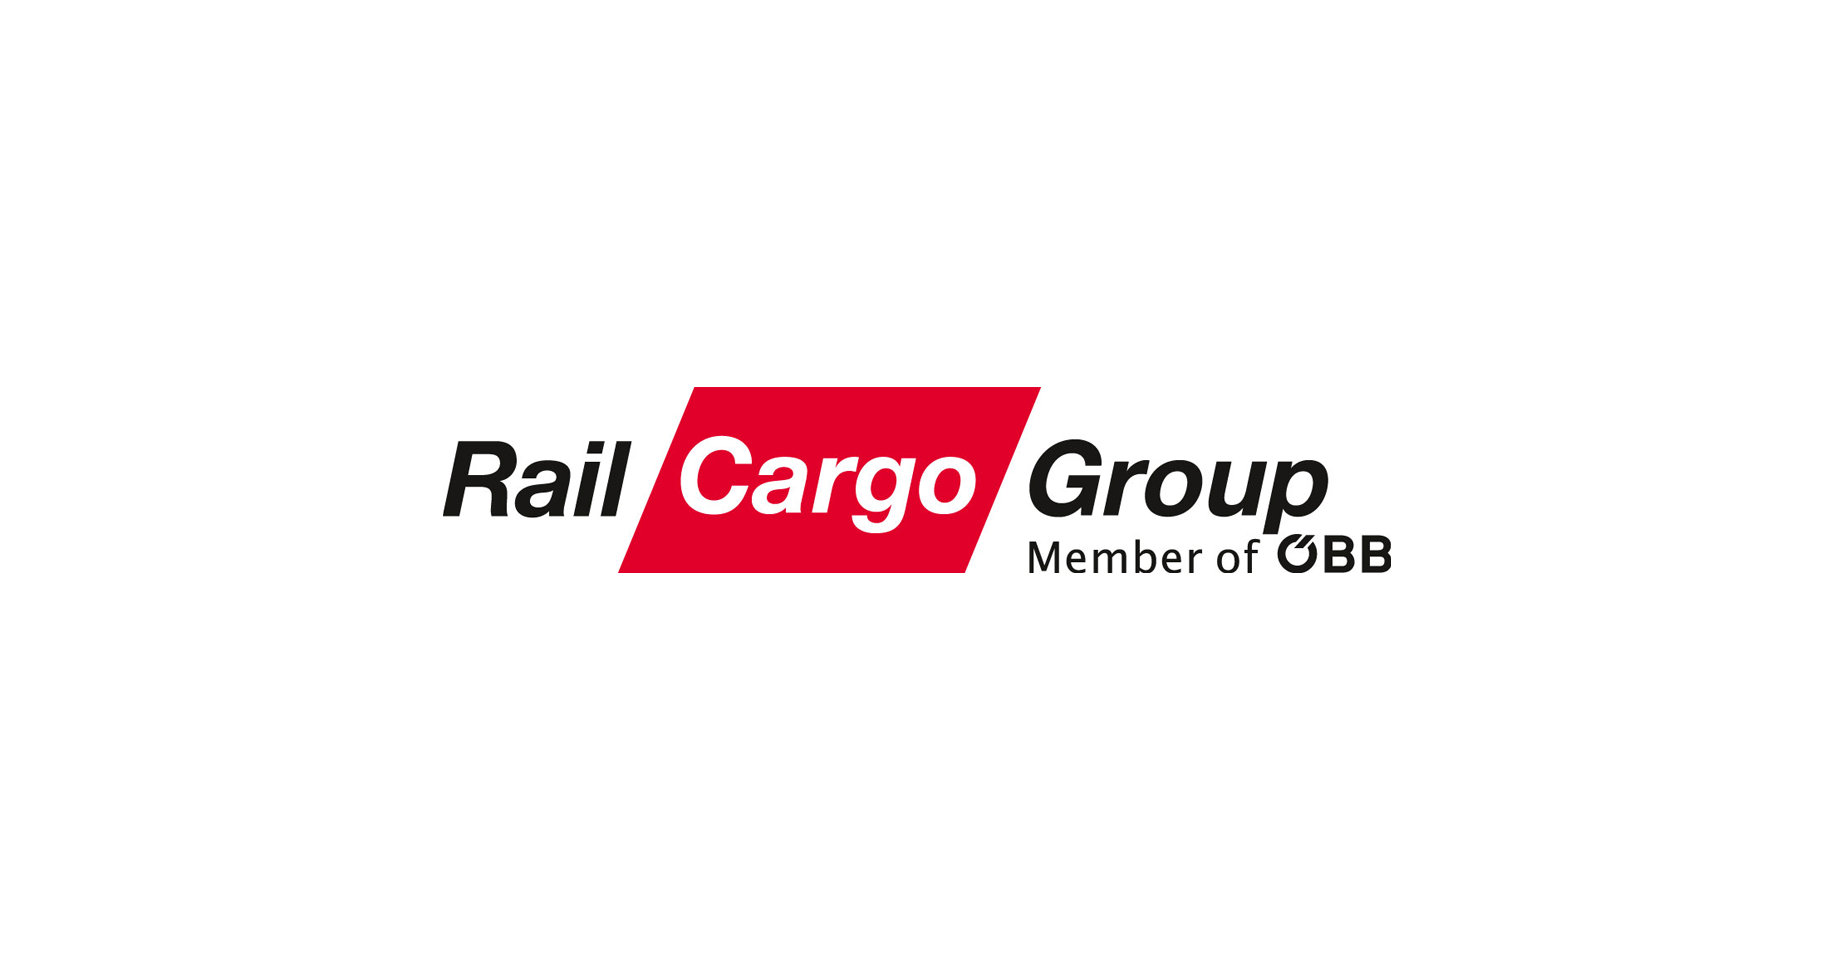 www.railcargo.com